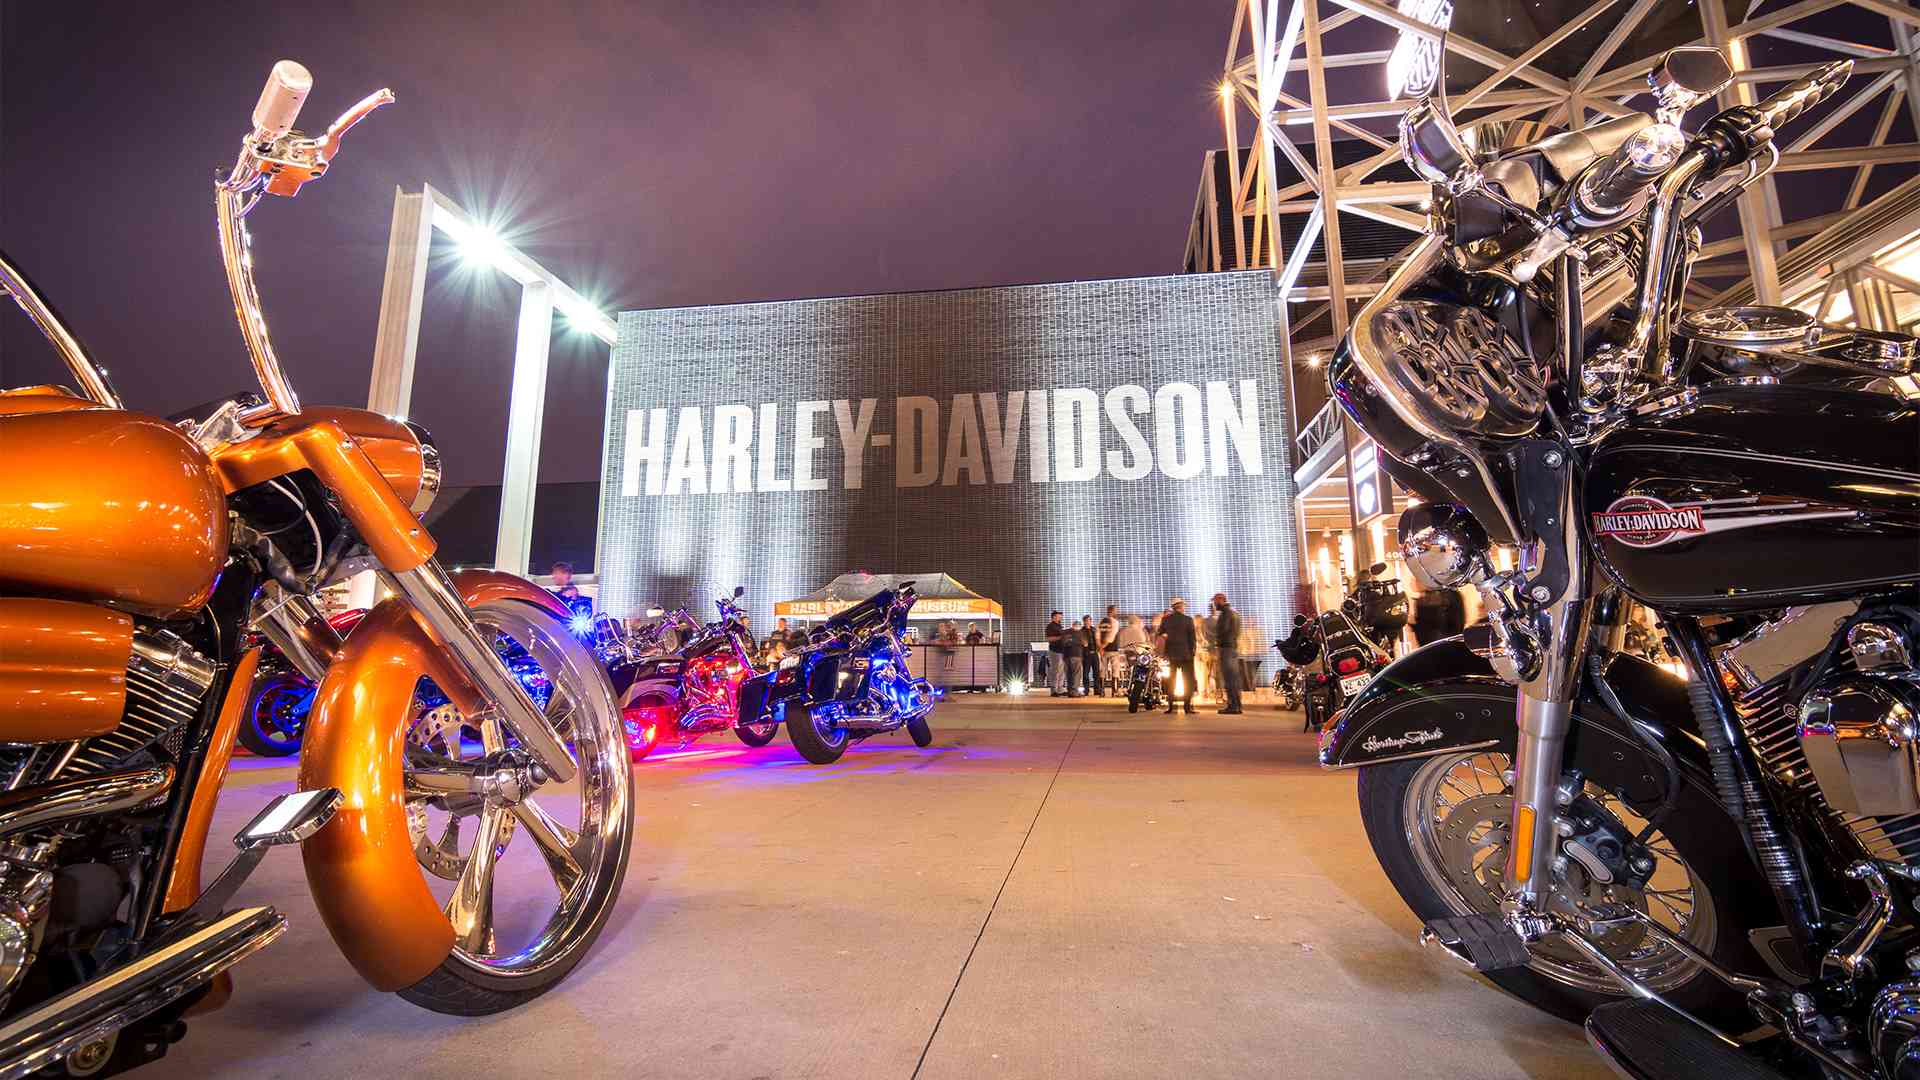 Know Before You Go HD HarleyDavidson USA